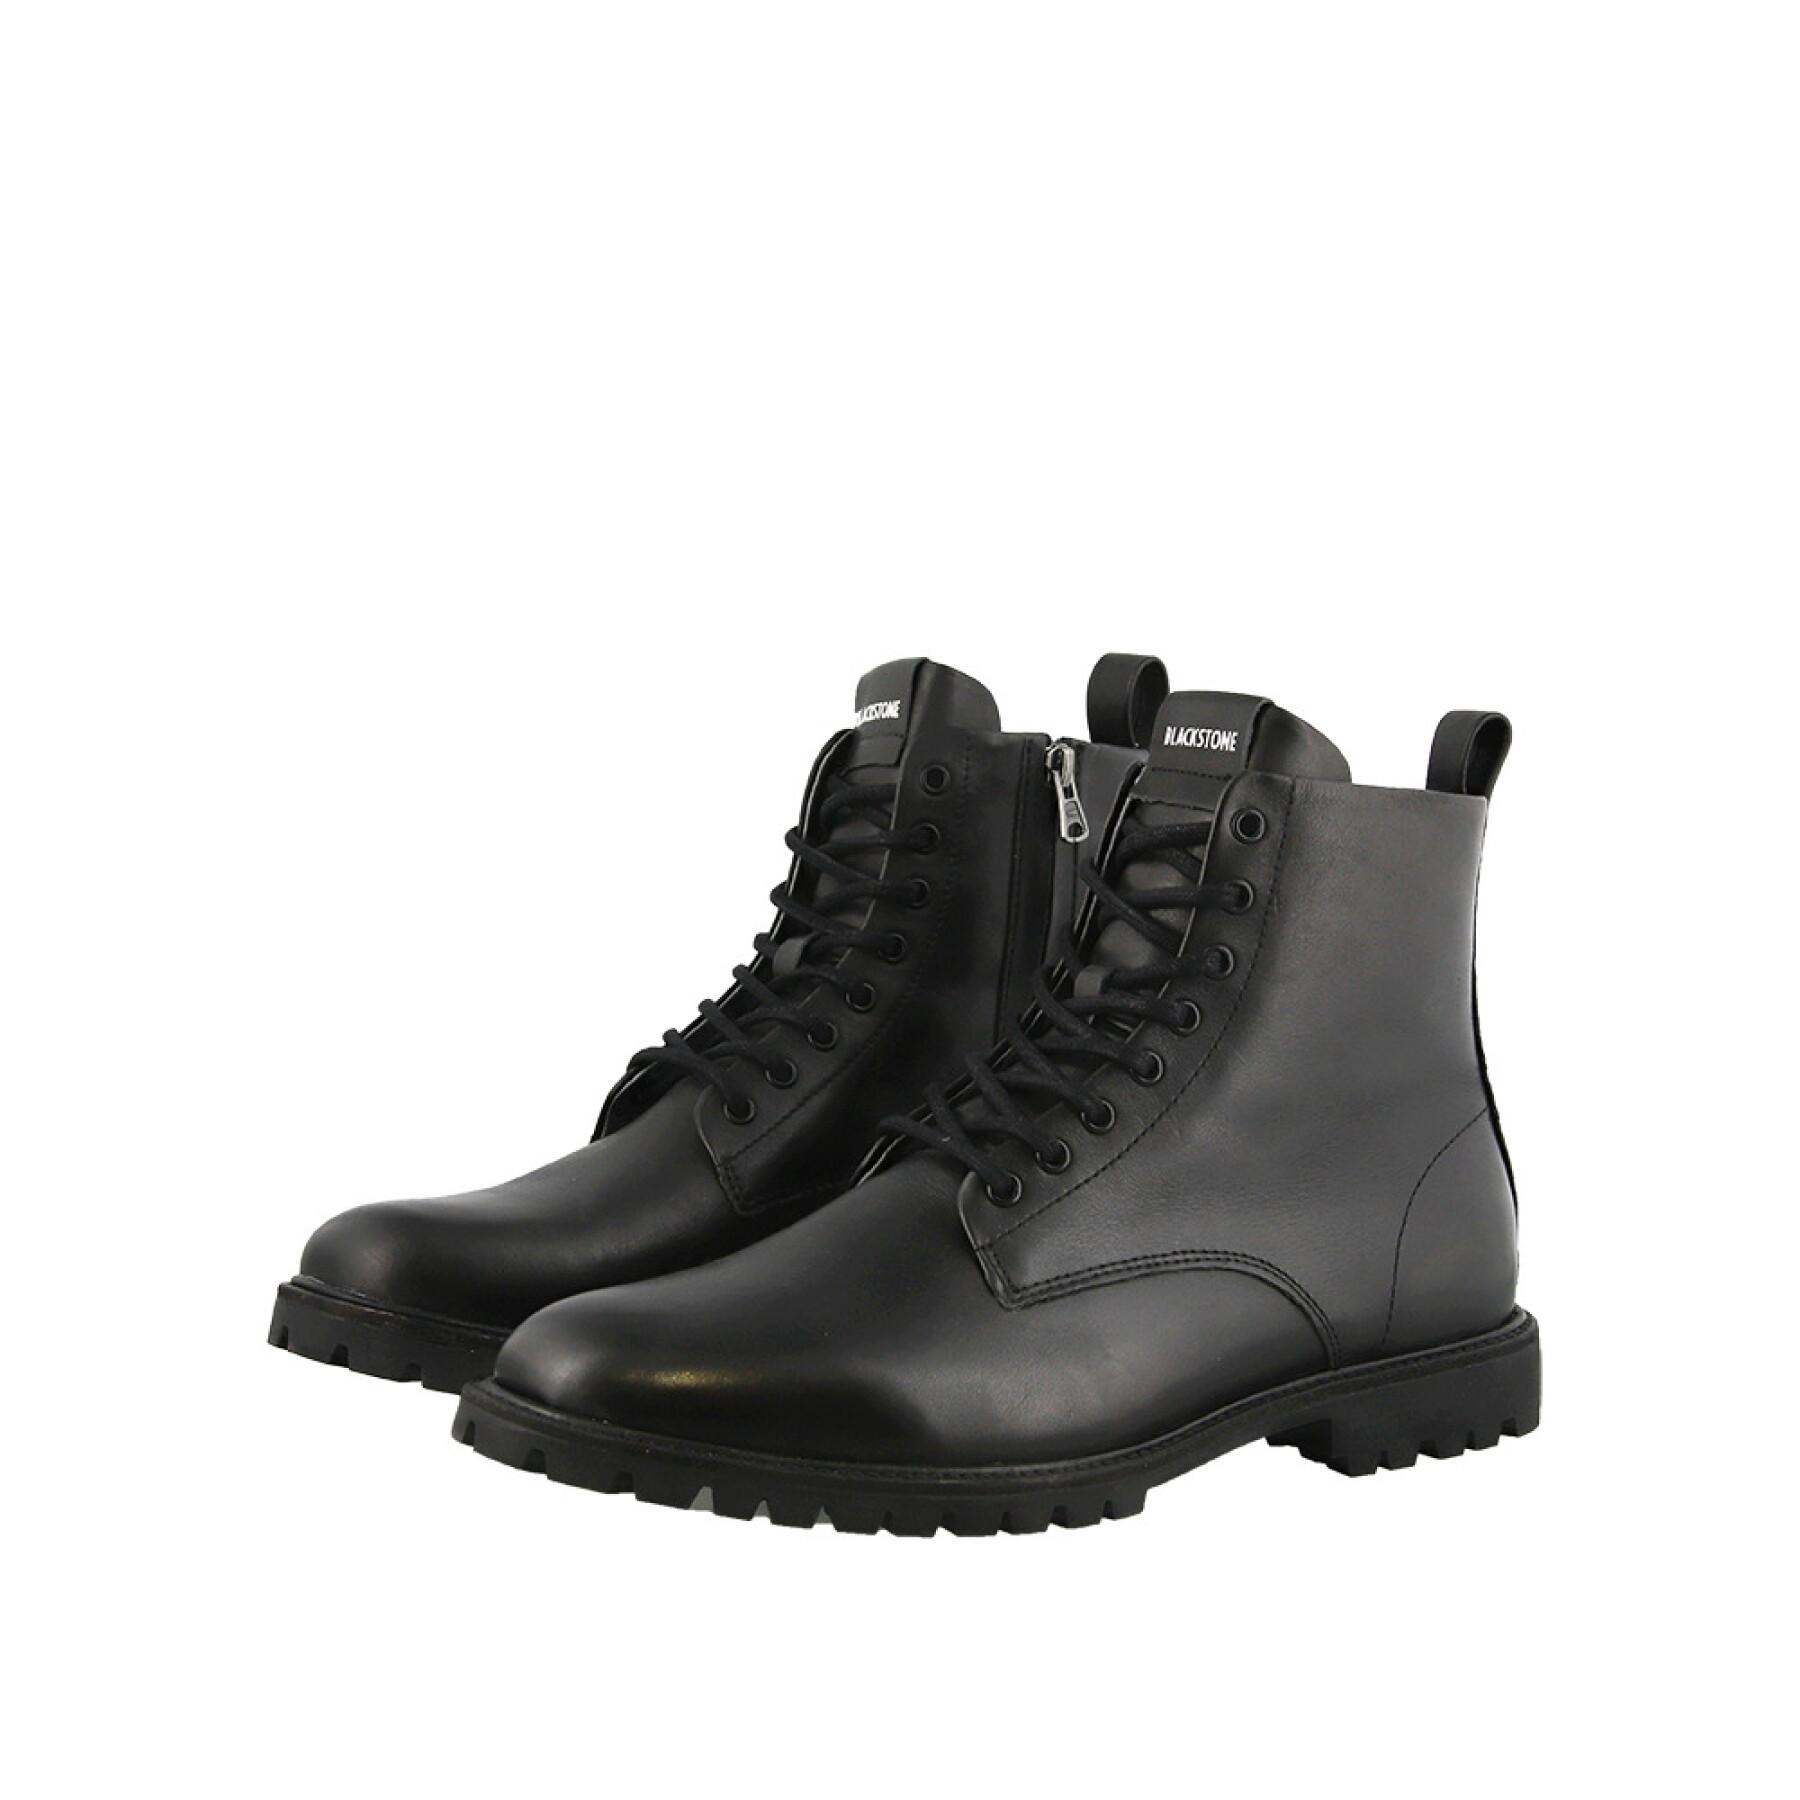 Shoes Blackstone Lace Up Boots - Blackstone - Sneakers - Men